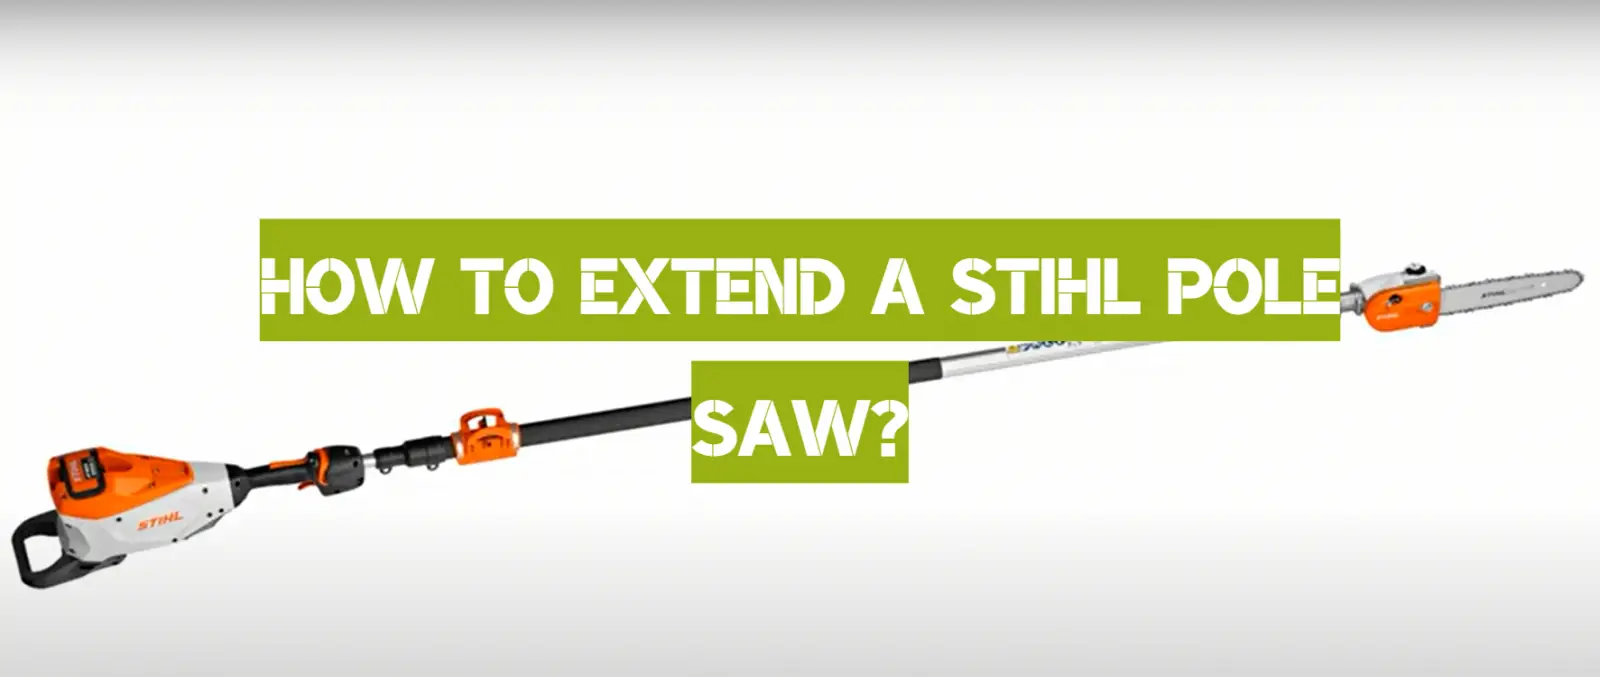 How to Extend a Stihl Pole Saw?